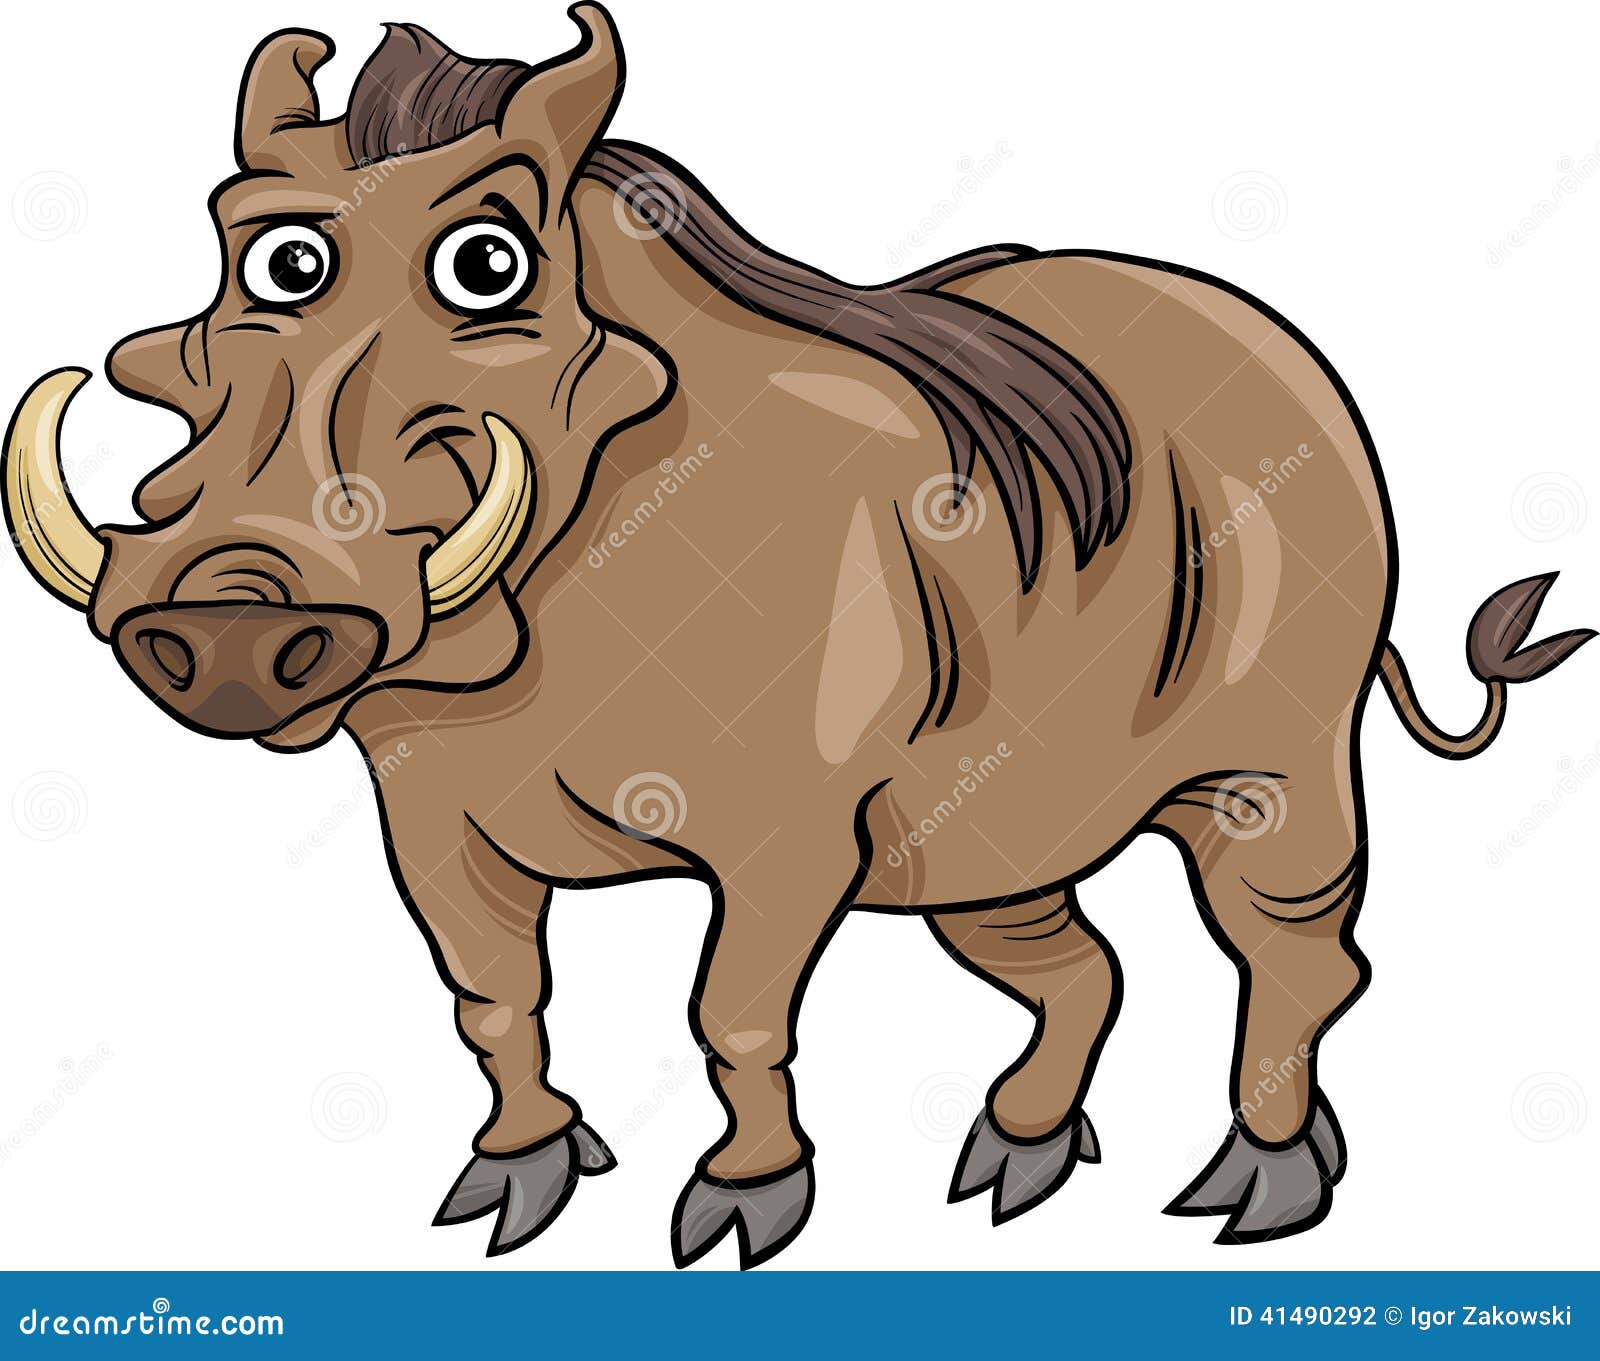 Download Warthog Animal Cartoon Illustration Stock Vector - Illustration of warthog, boar: 41490292